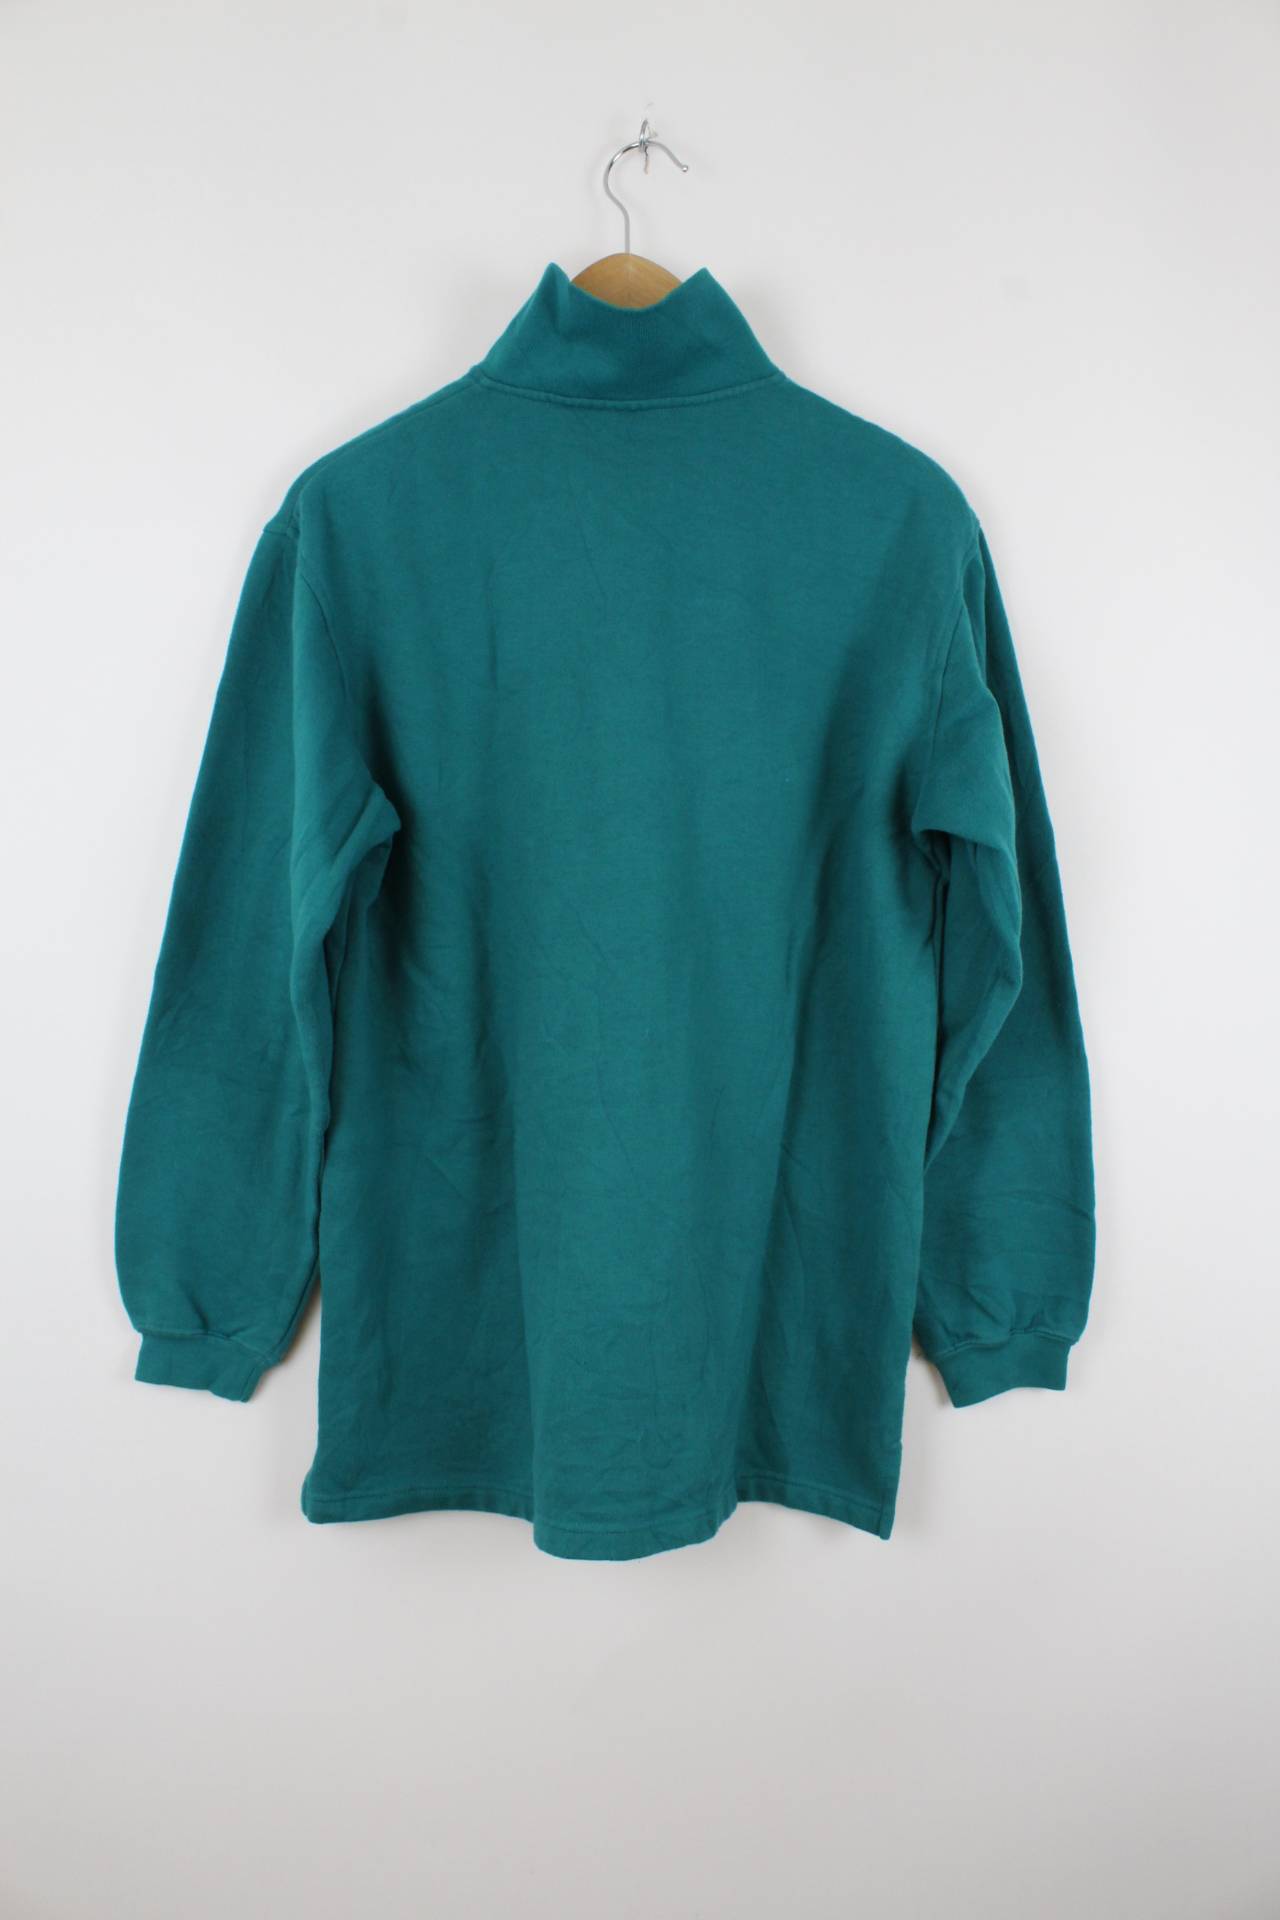 Vintage USA Zip-Up Sweater Blau - M